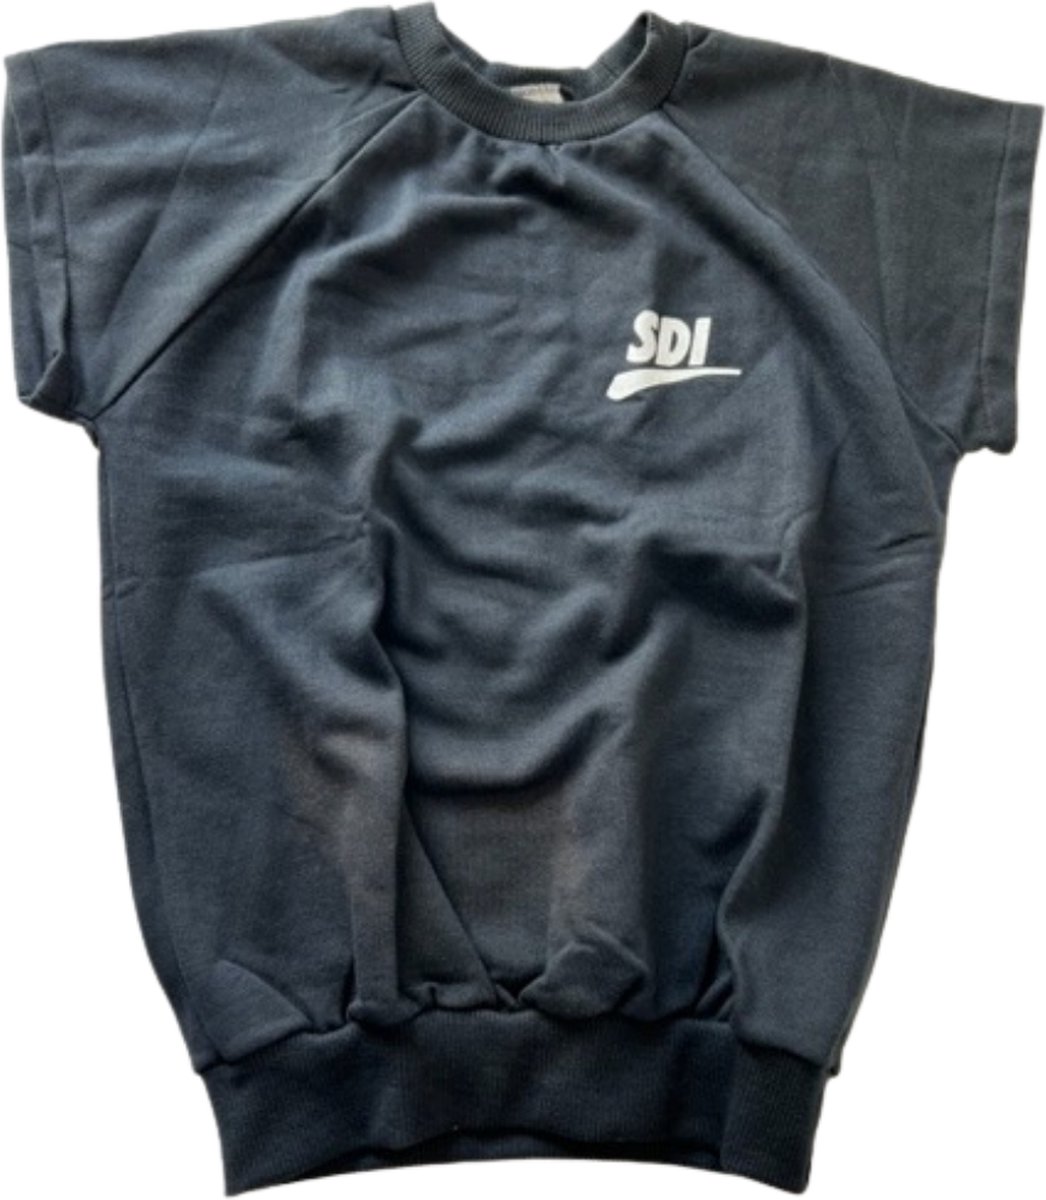 SDI - opwarm T-shirt - boksen - maat XS - zwart